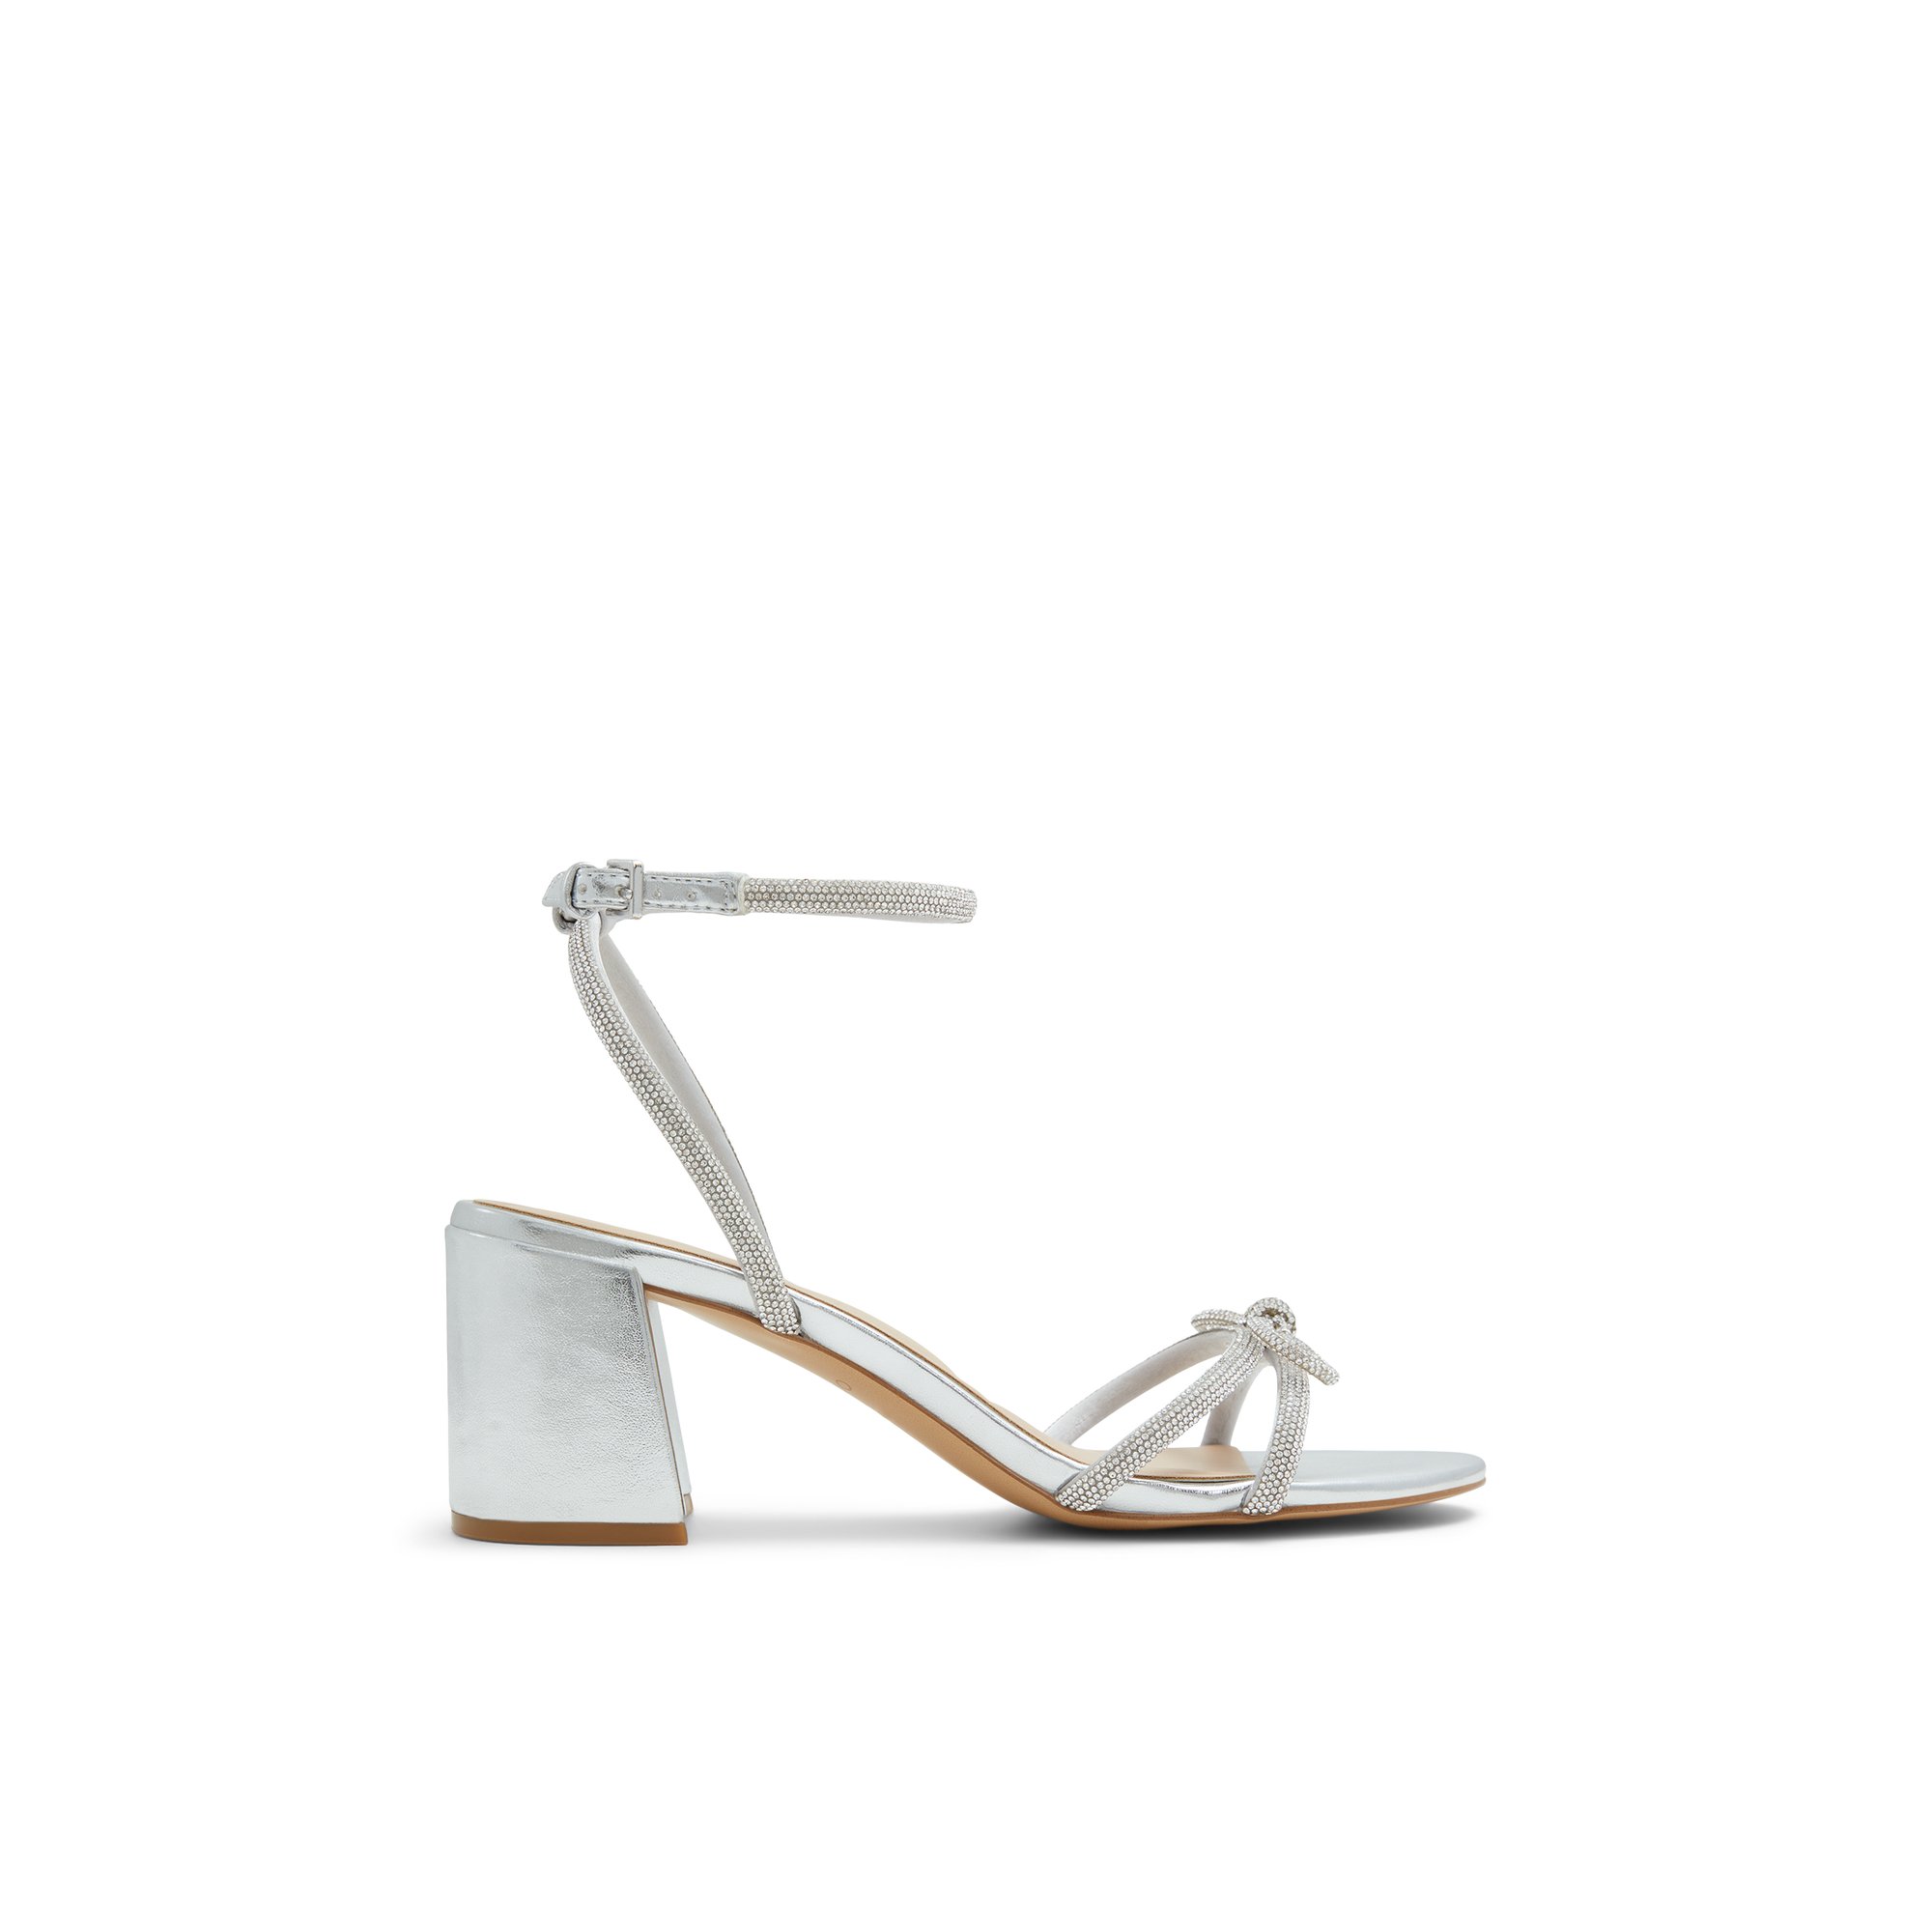 ALDO Bouclette - Women's Strappy Sandal Sandals - Silver